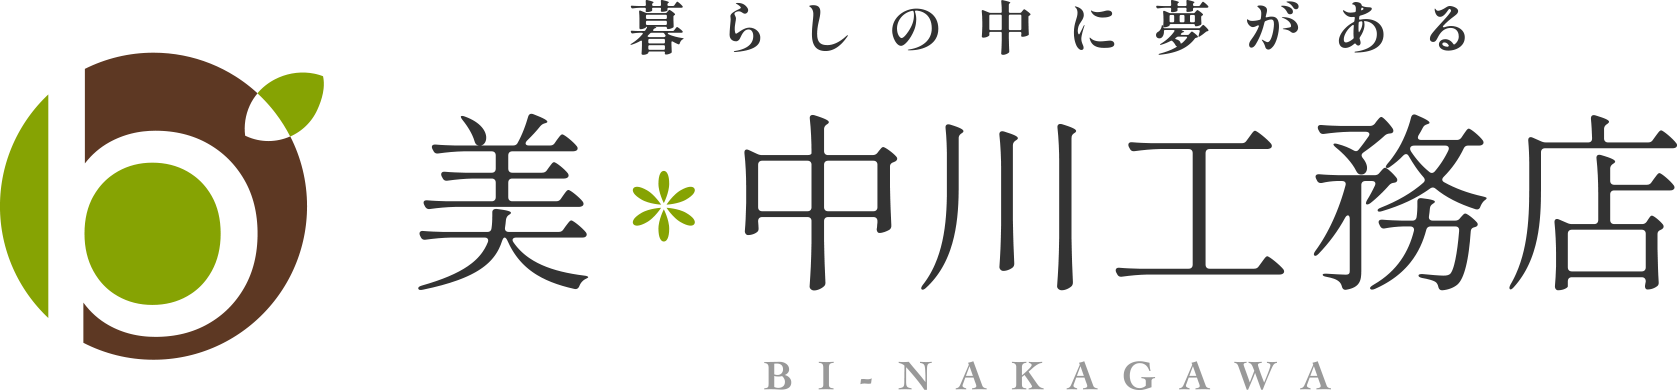 Bi-nakagawa logo